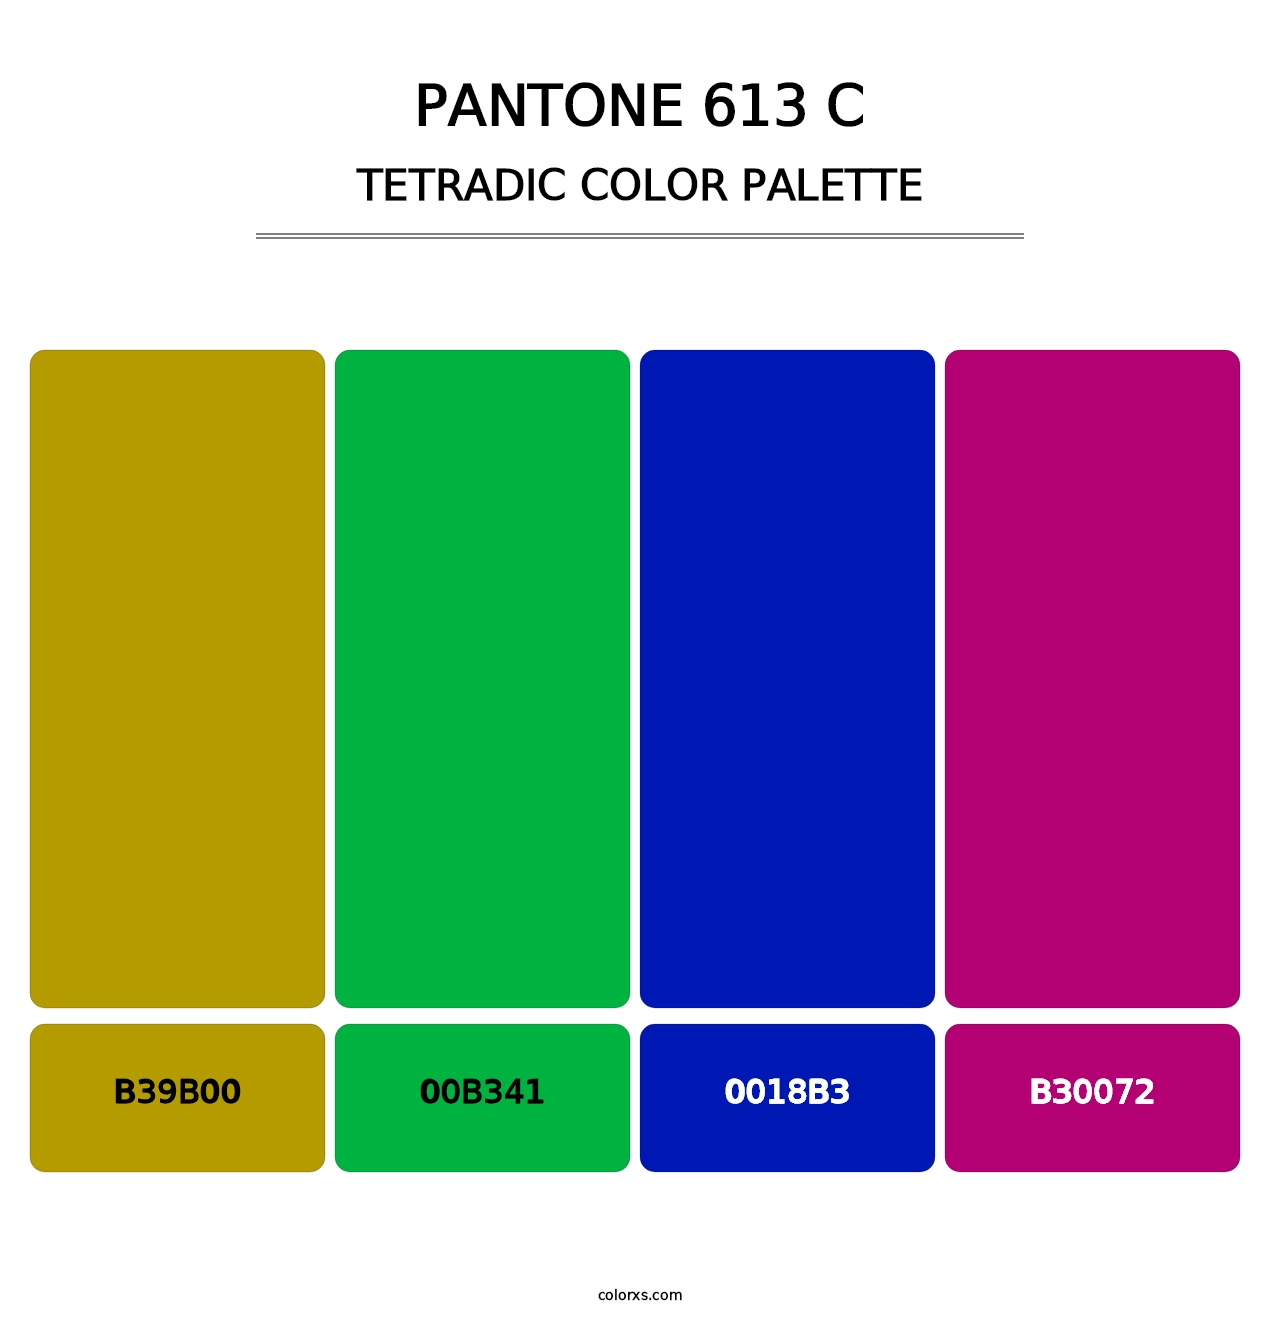 PANTONE 613 C - Tetradic Color Palette